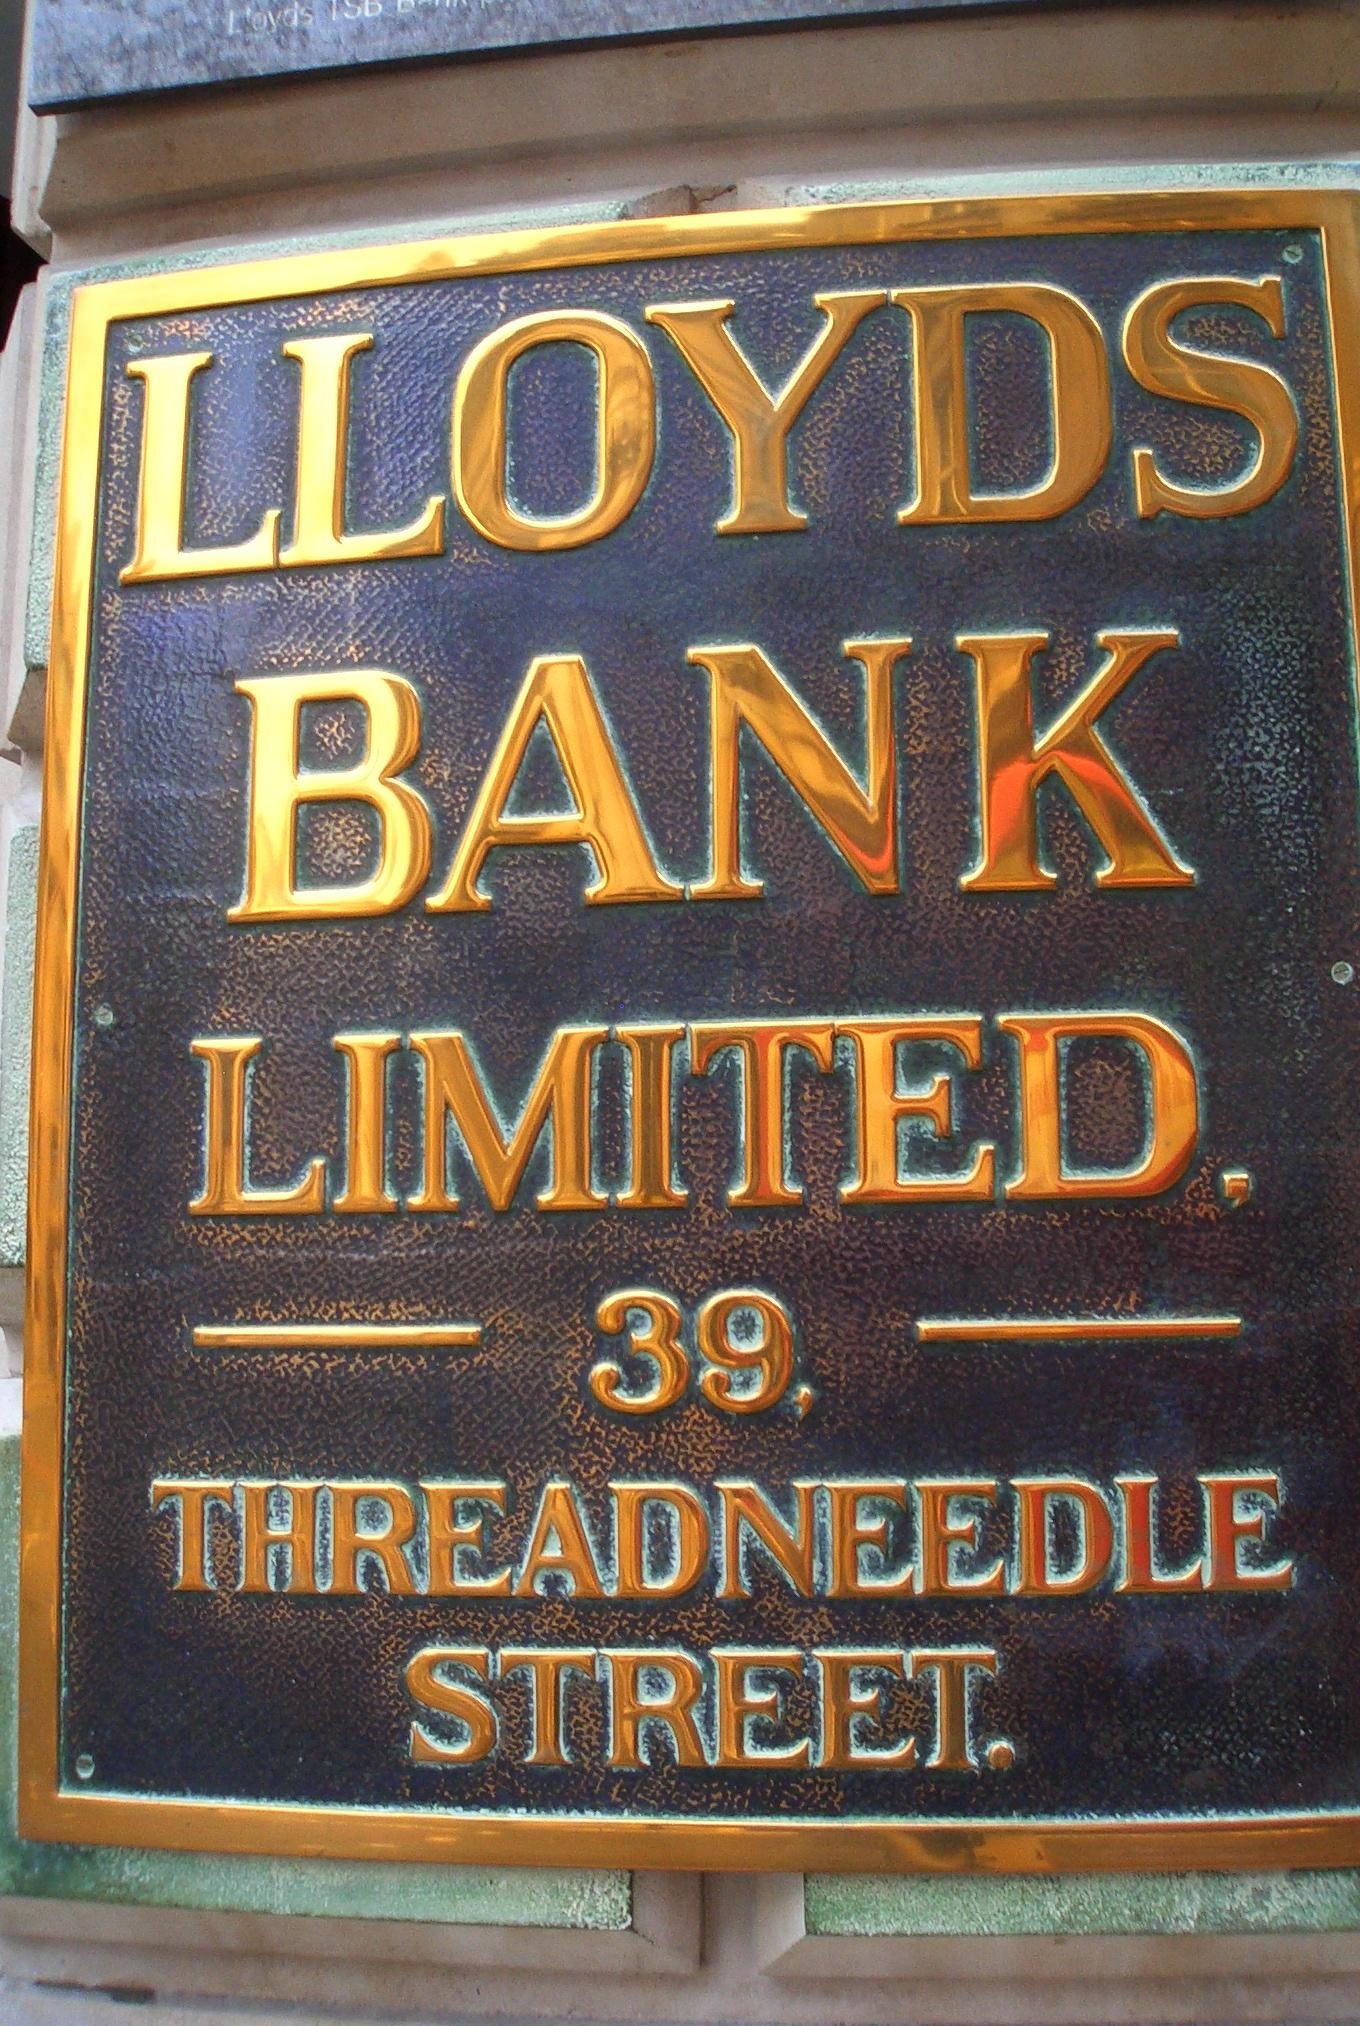 4. Lloyds Bank in London